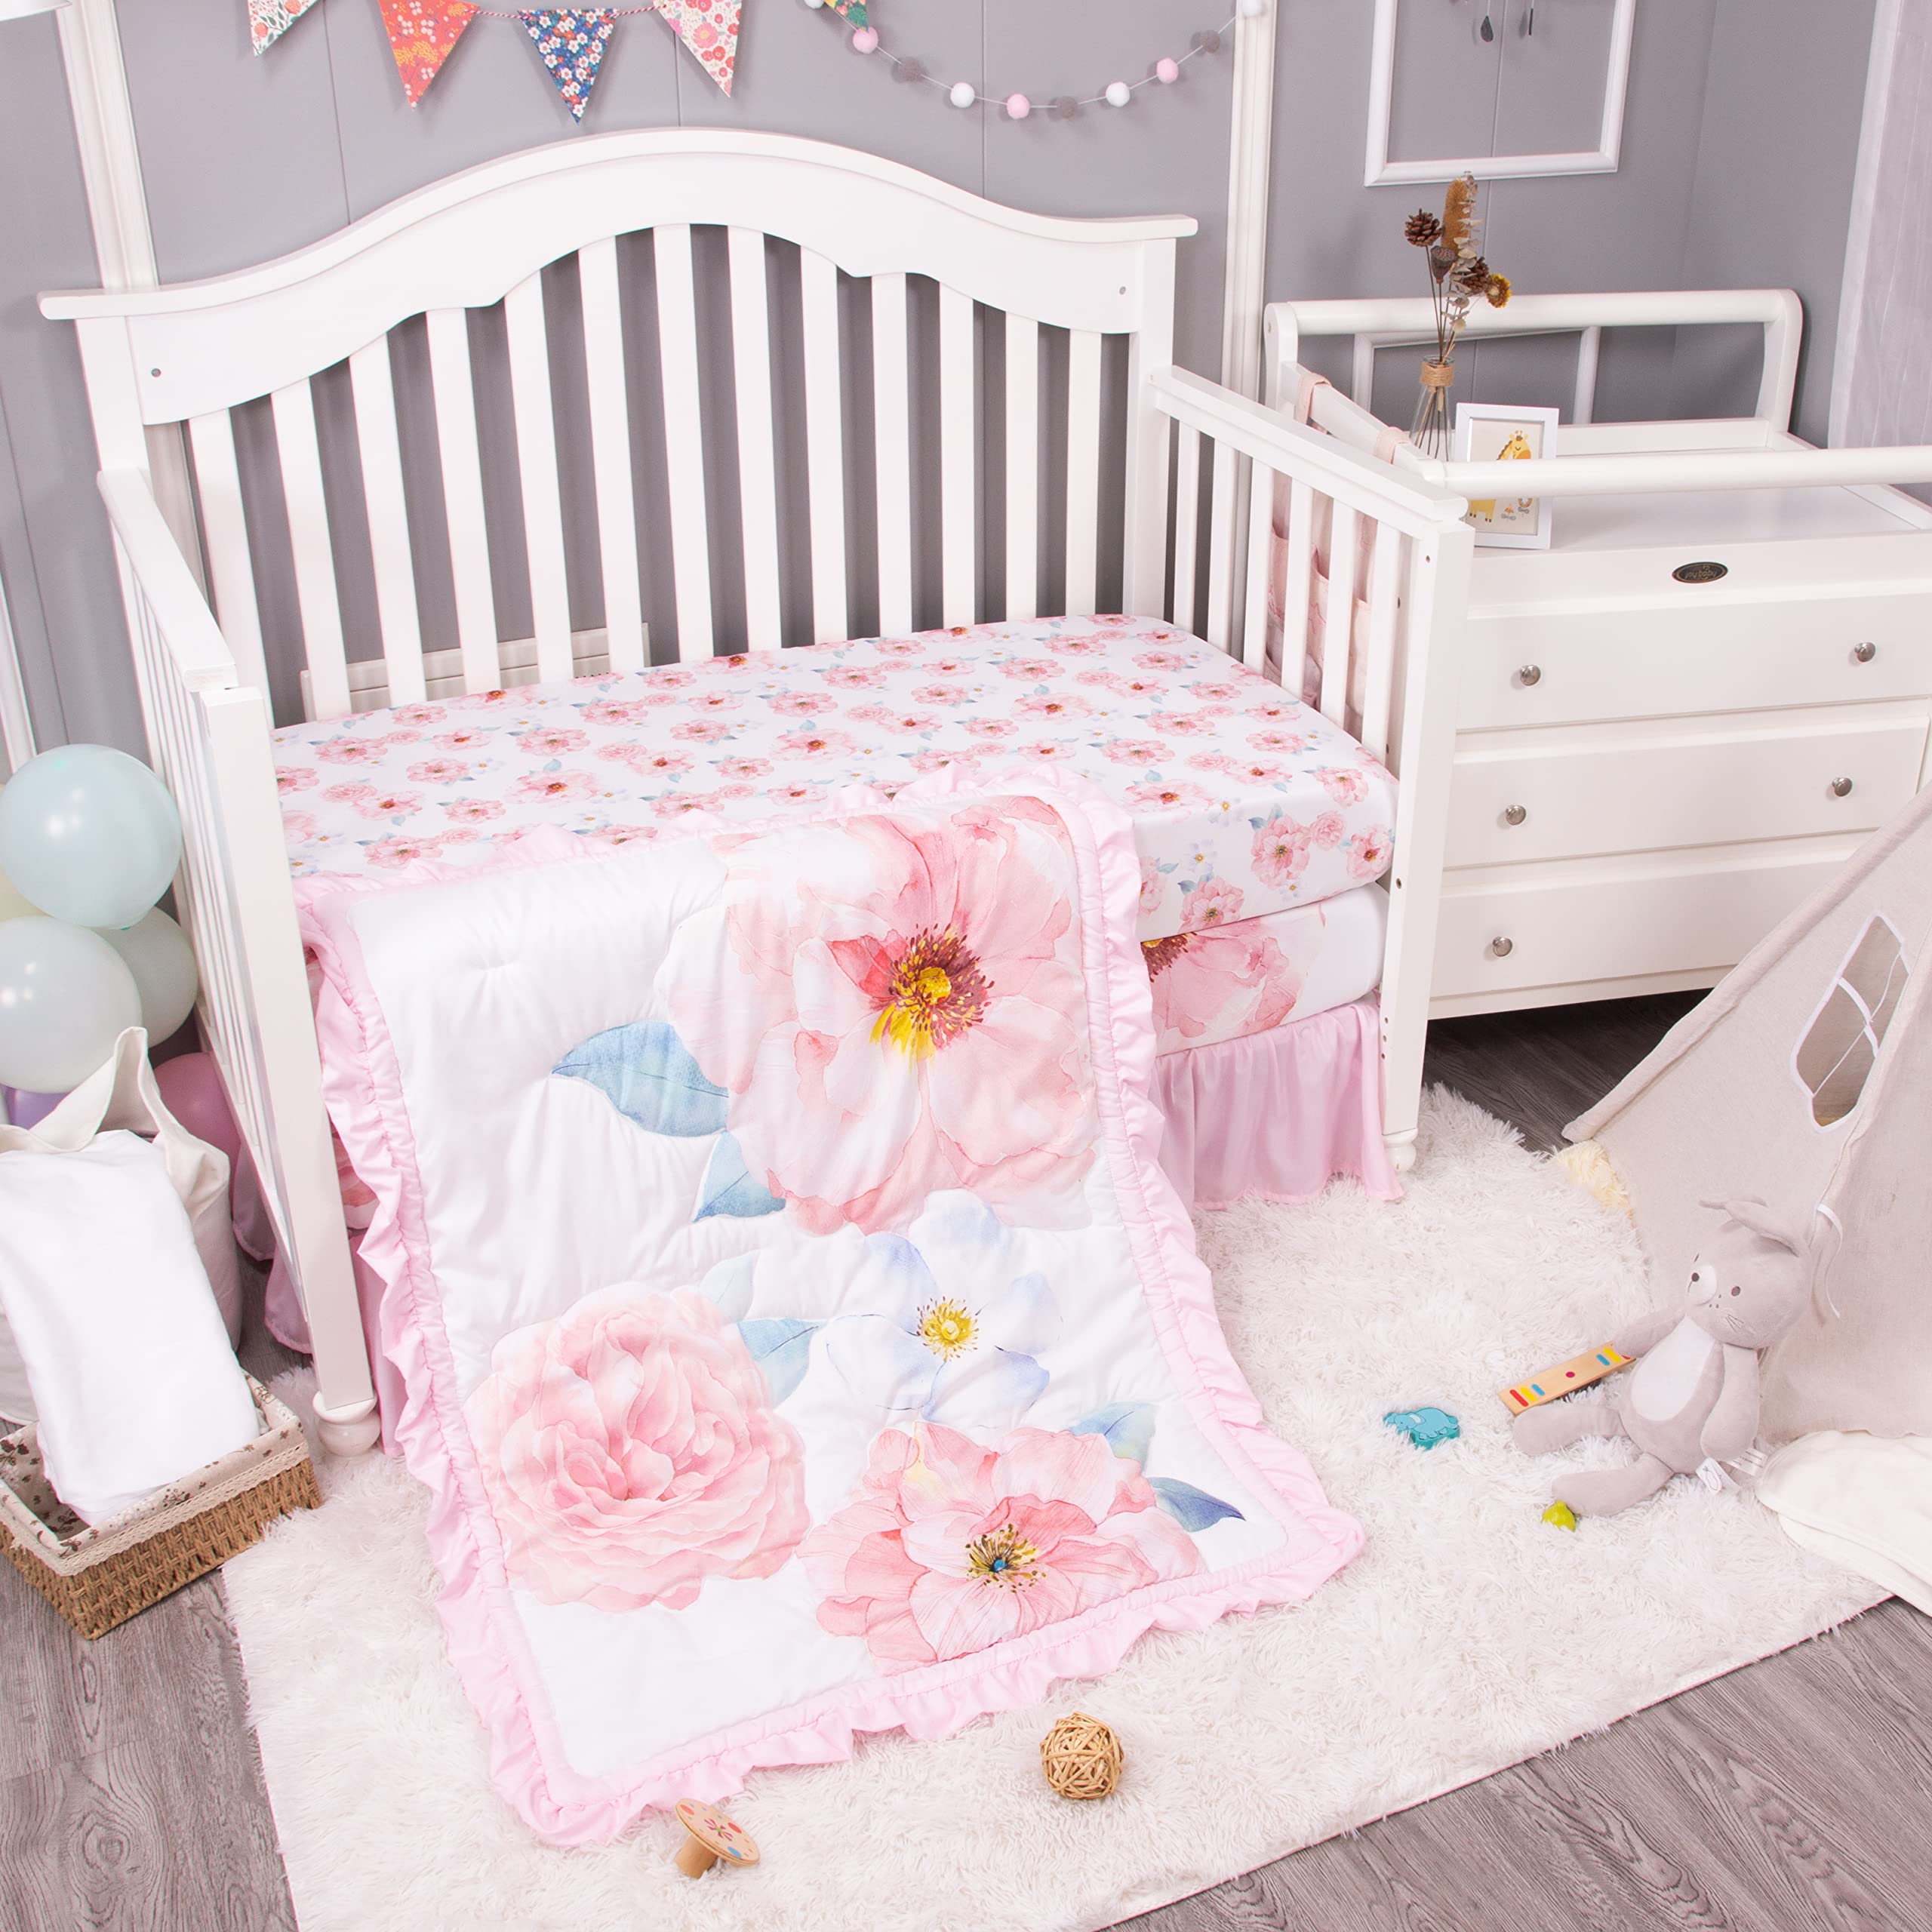 La Premura Baby Girl Crib Bedding Set for Girls, 4-Piece Nursery Crib Set Including Crib Sheet, Blanket, Crib Skirt and Pillow Cover, Watercolor Rose, Pastel Pink & Baby Blue